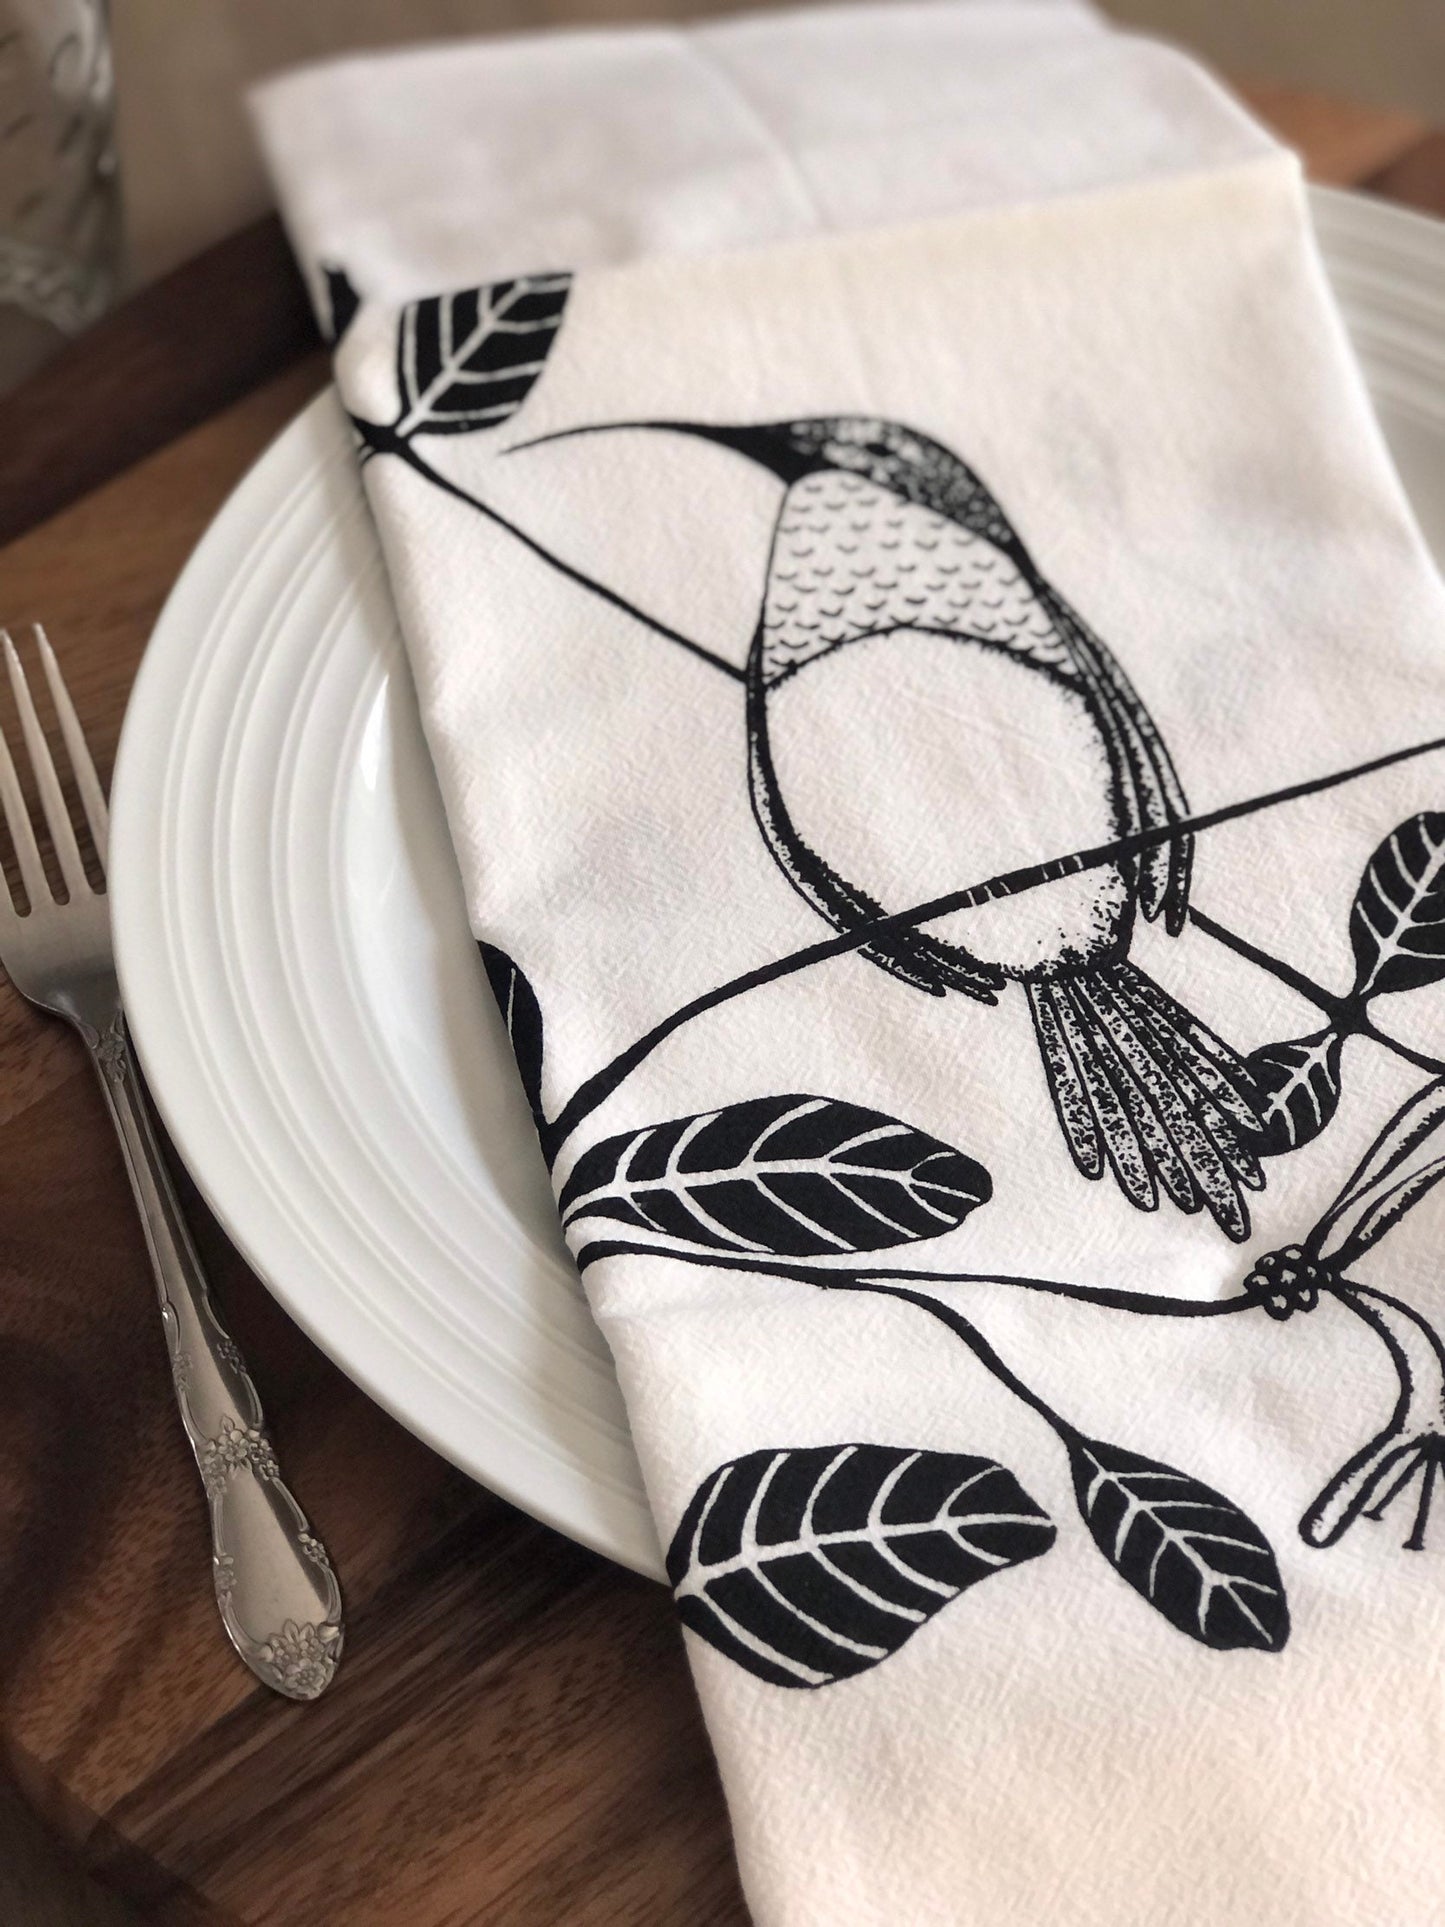 Hummingbird dinner napkin set